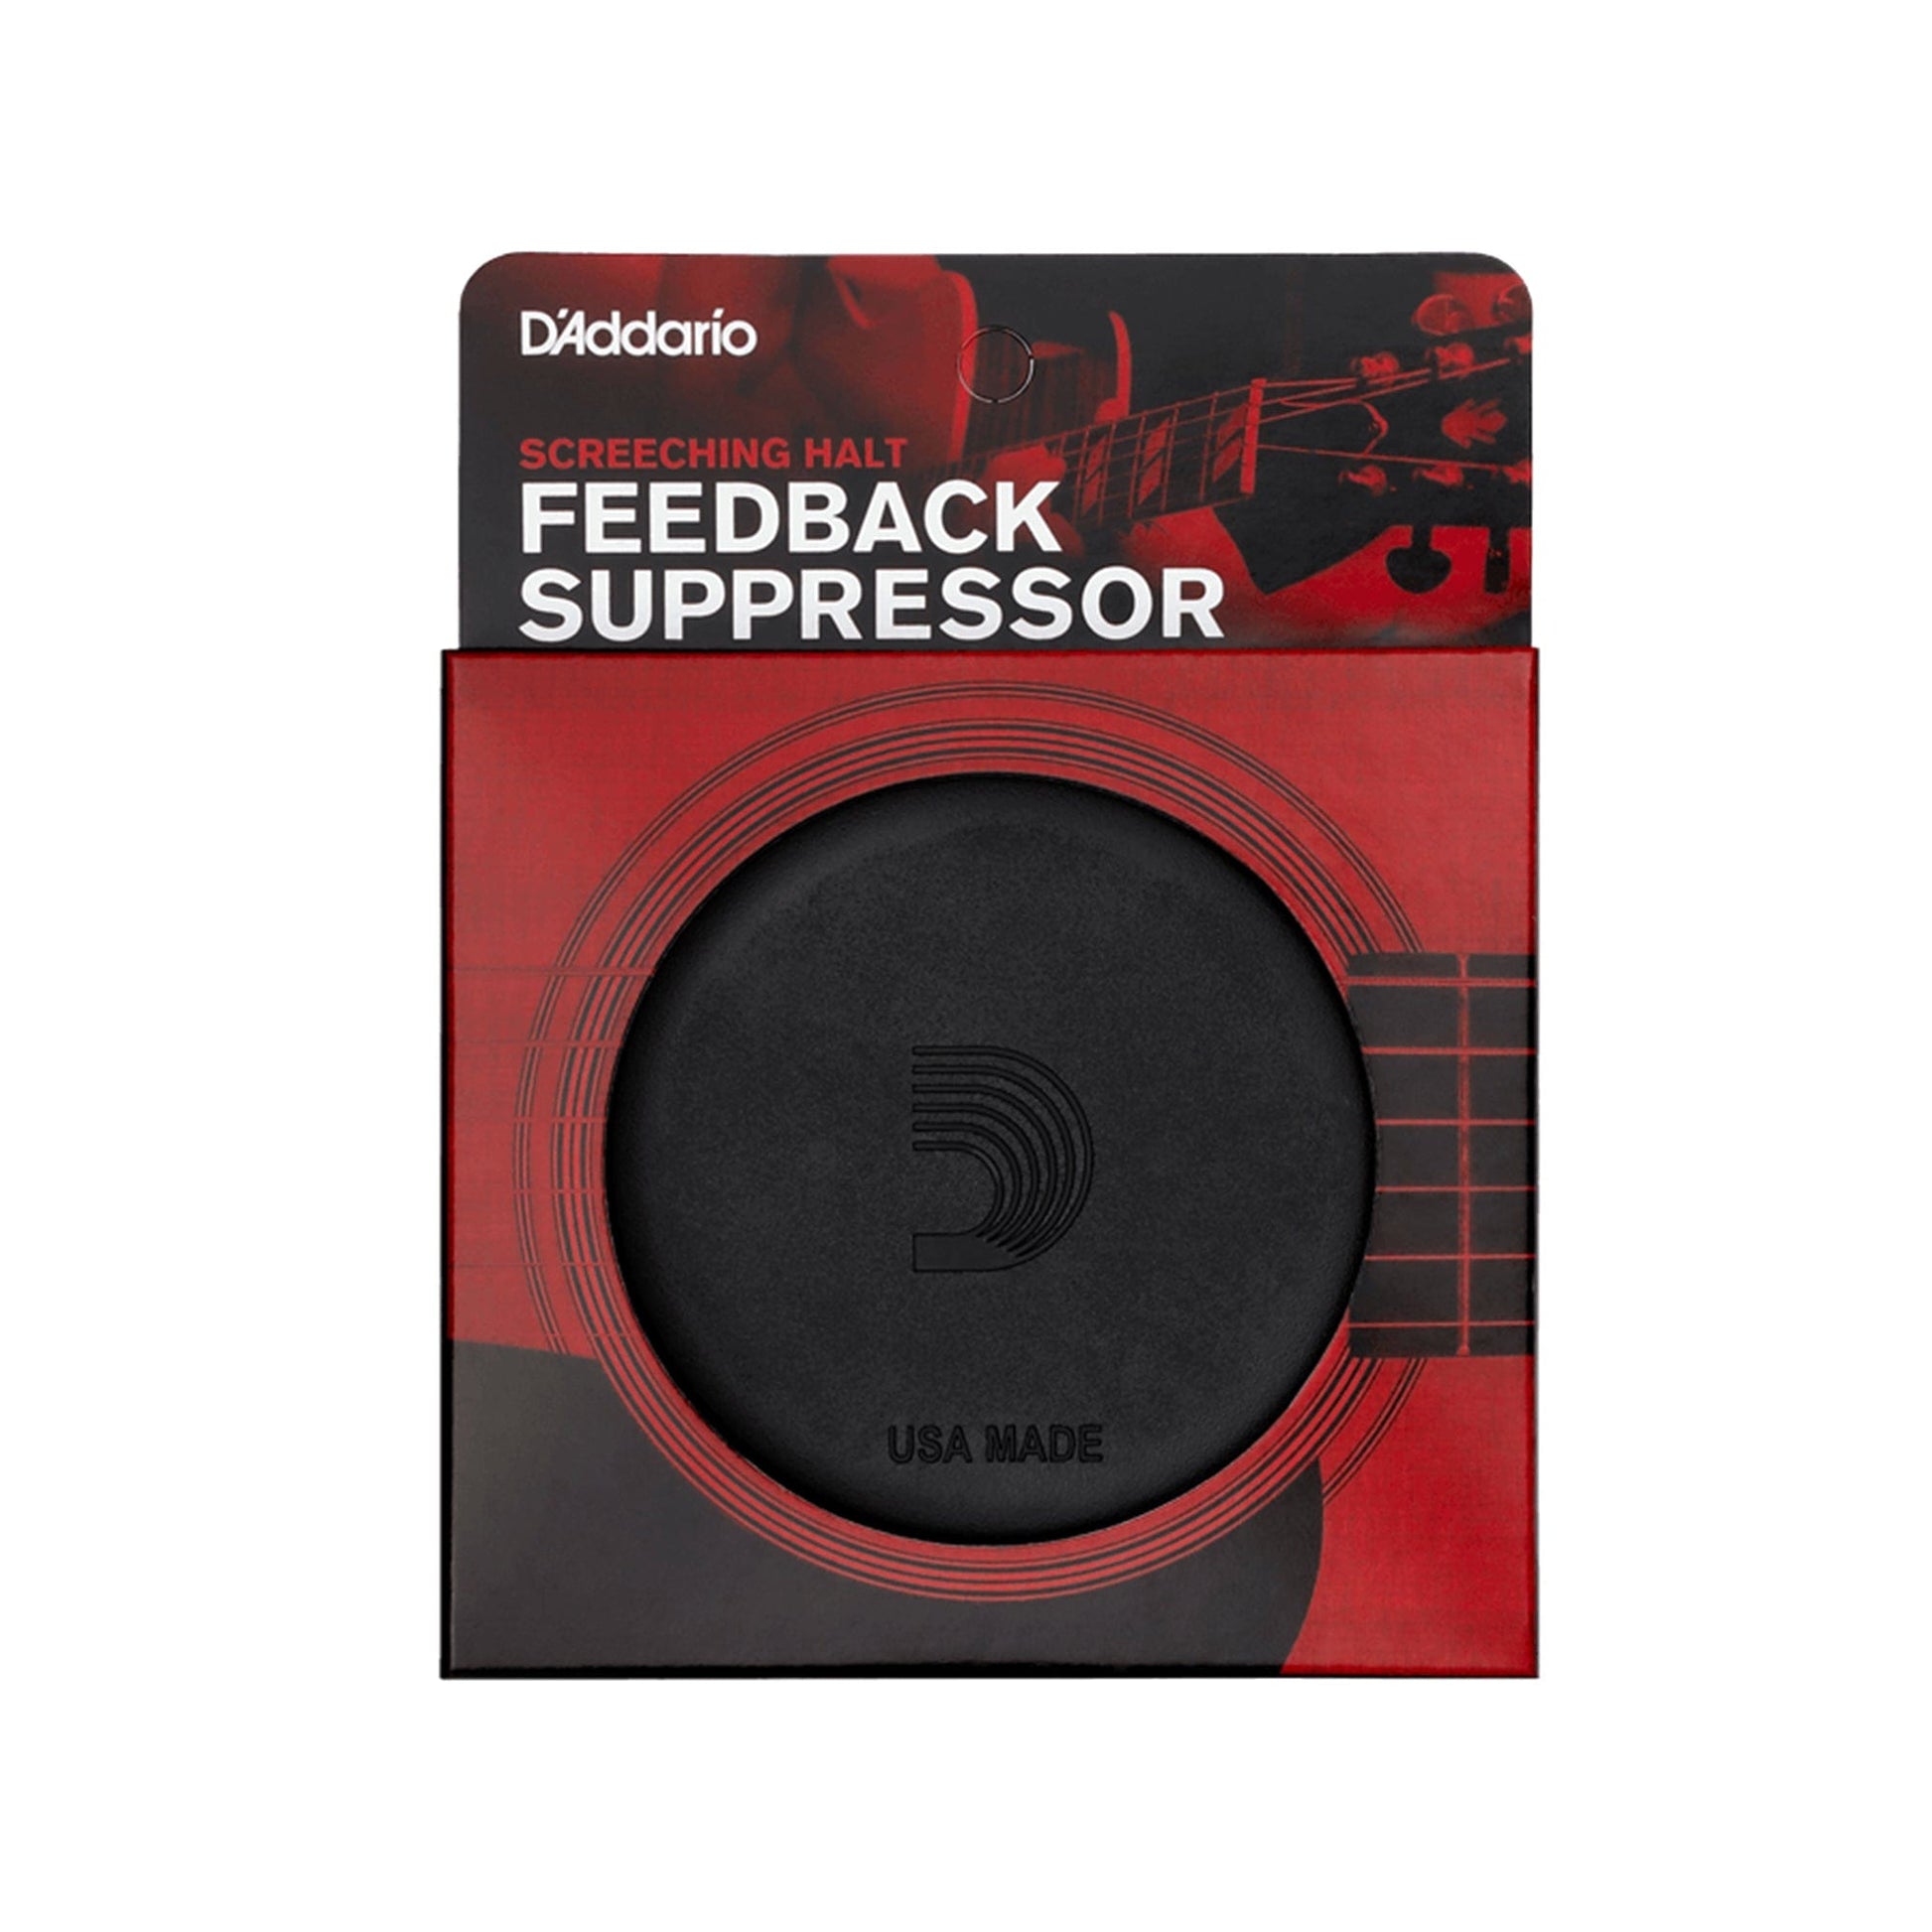 D'Addario Screeching Halt Feedback Suppressor Sound Hole Cover Accessories / Tools